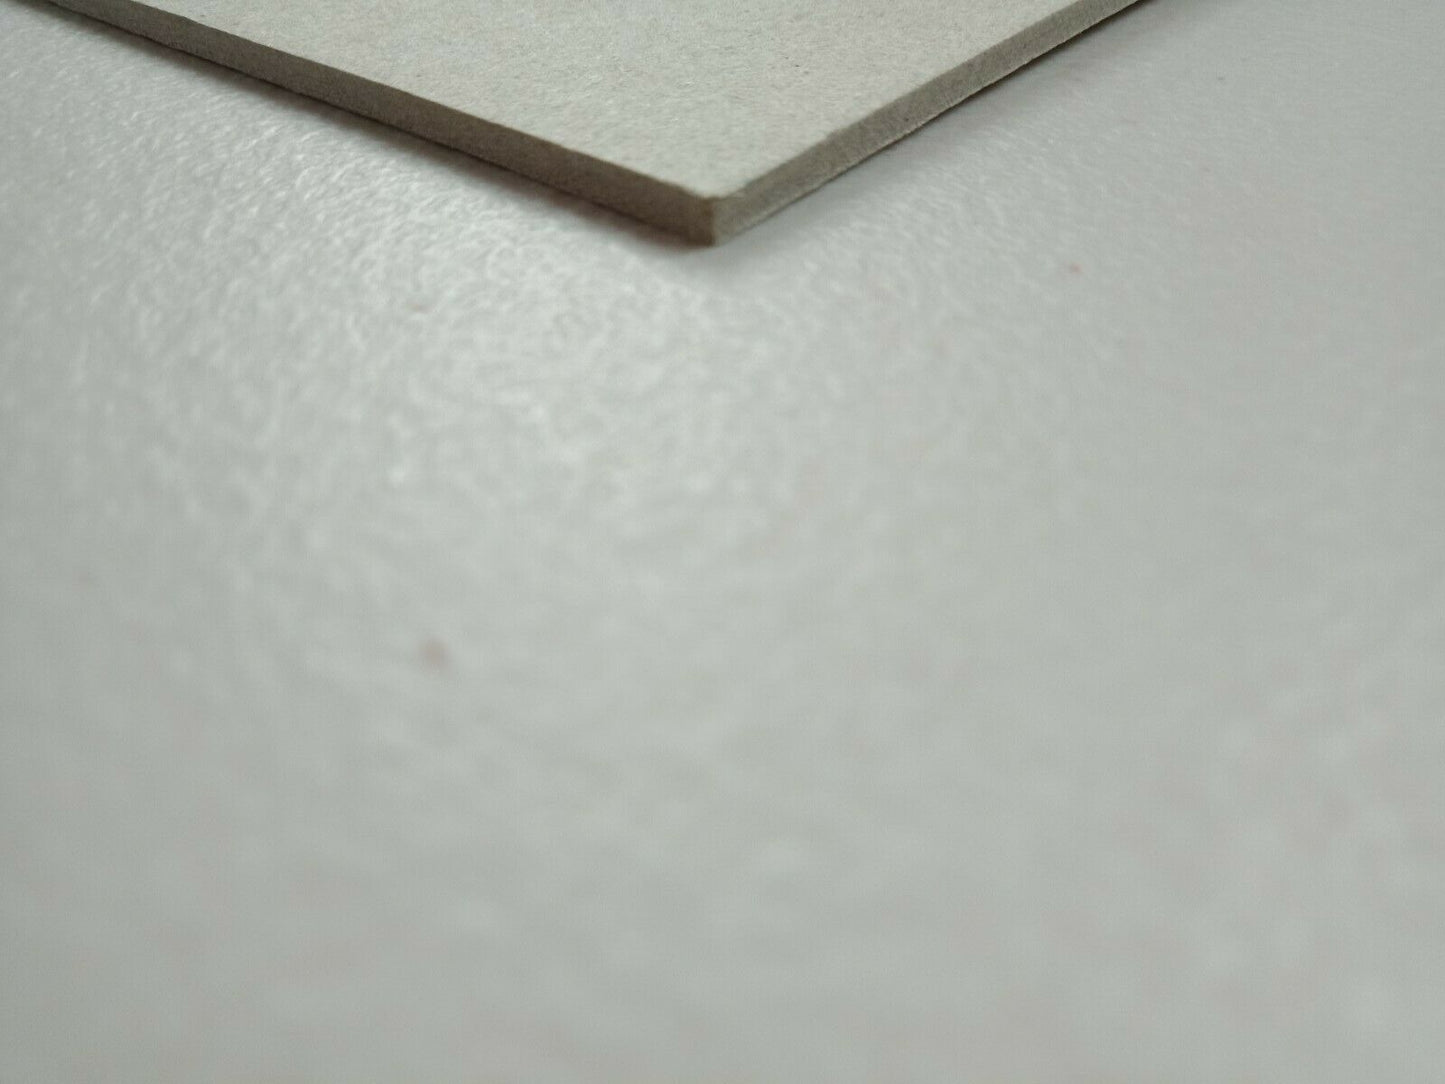 100% ARCHIVAL ACID FREE Binder's boards- High density KAPPA BOARDS-3mm